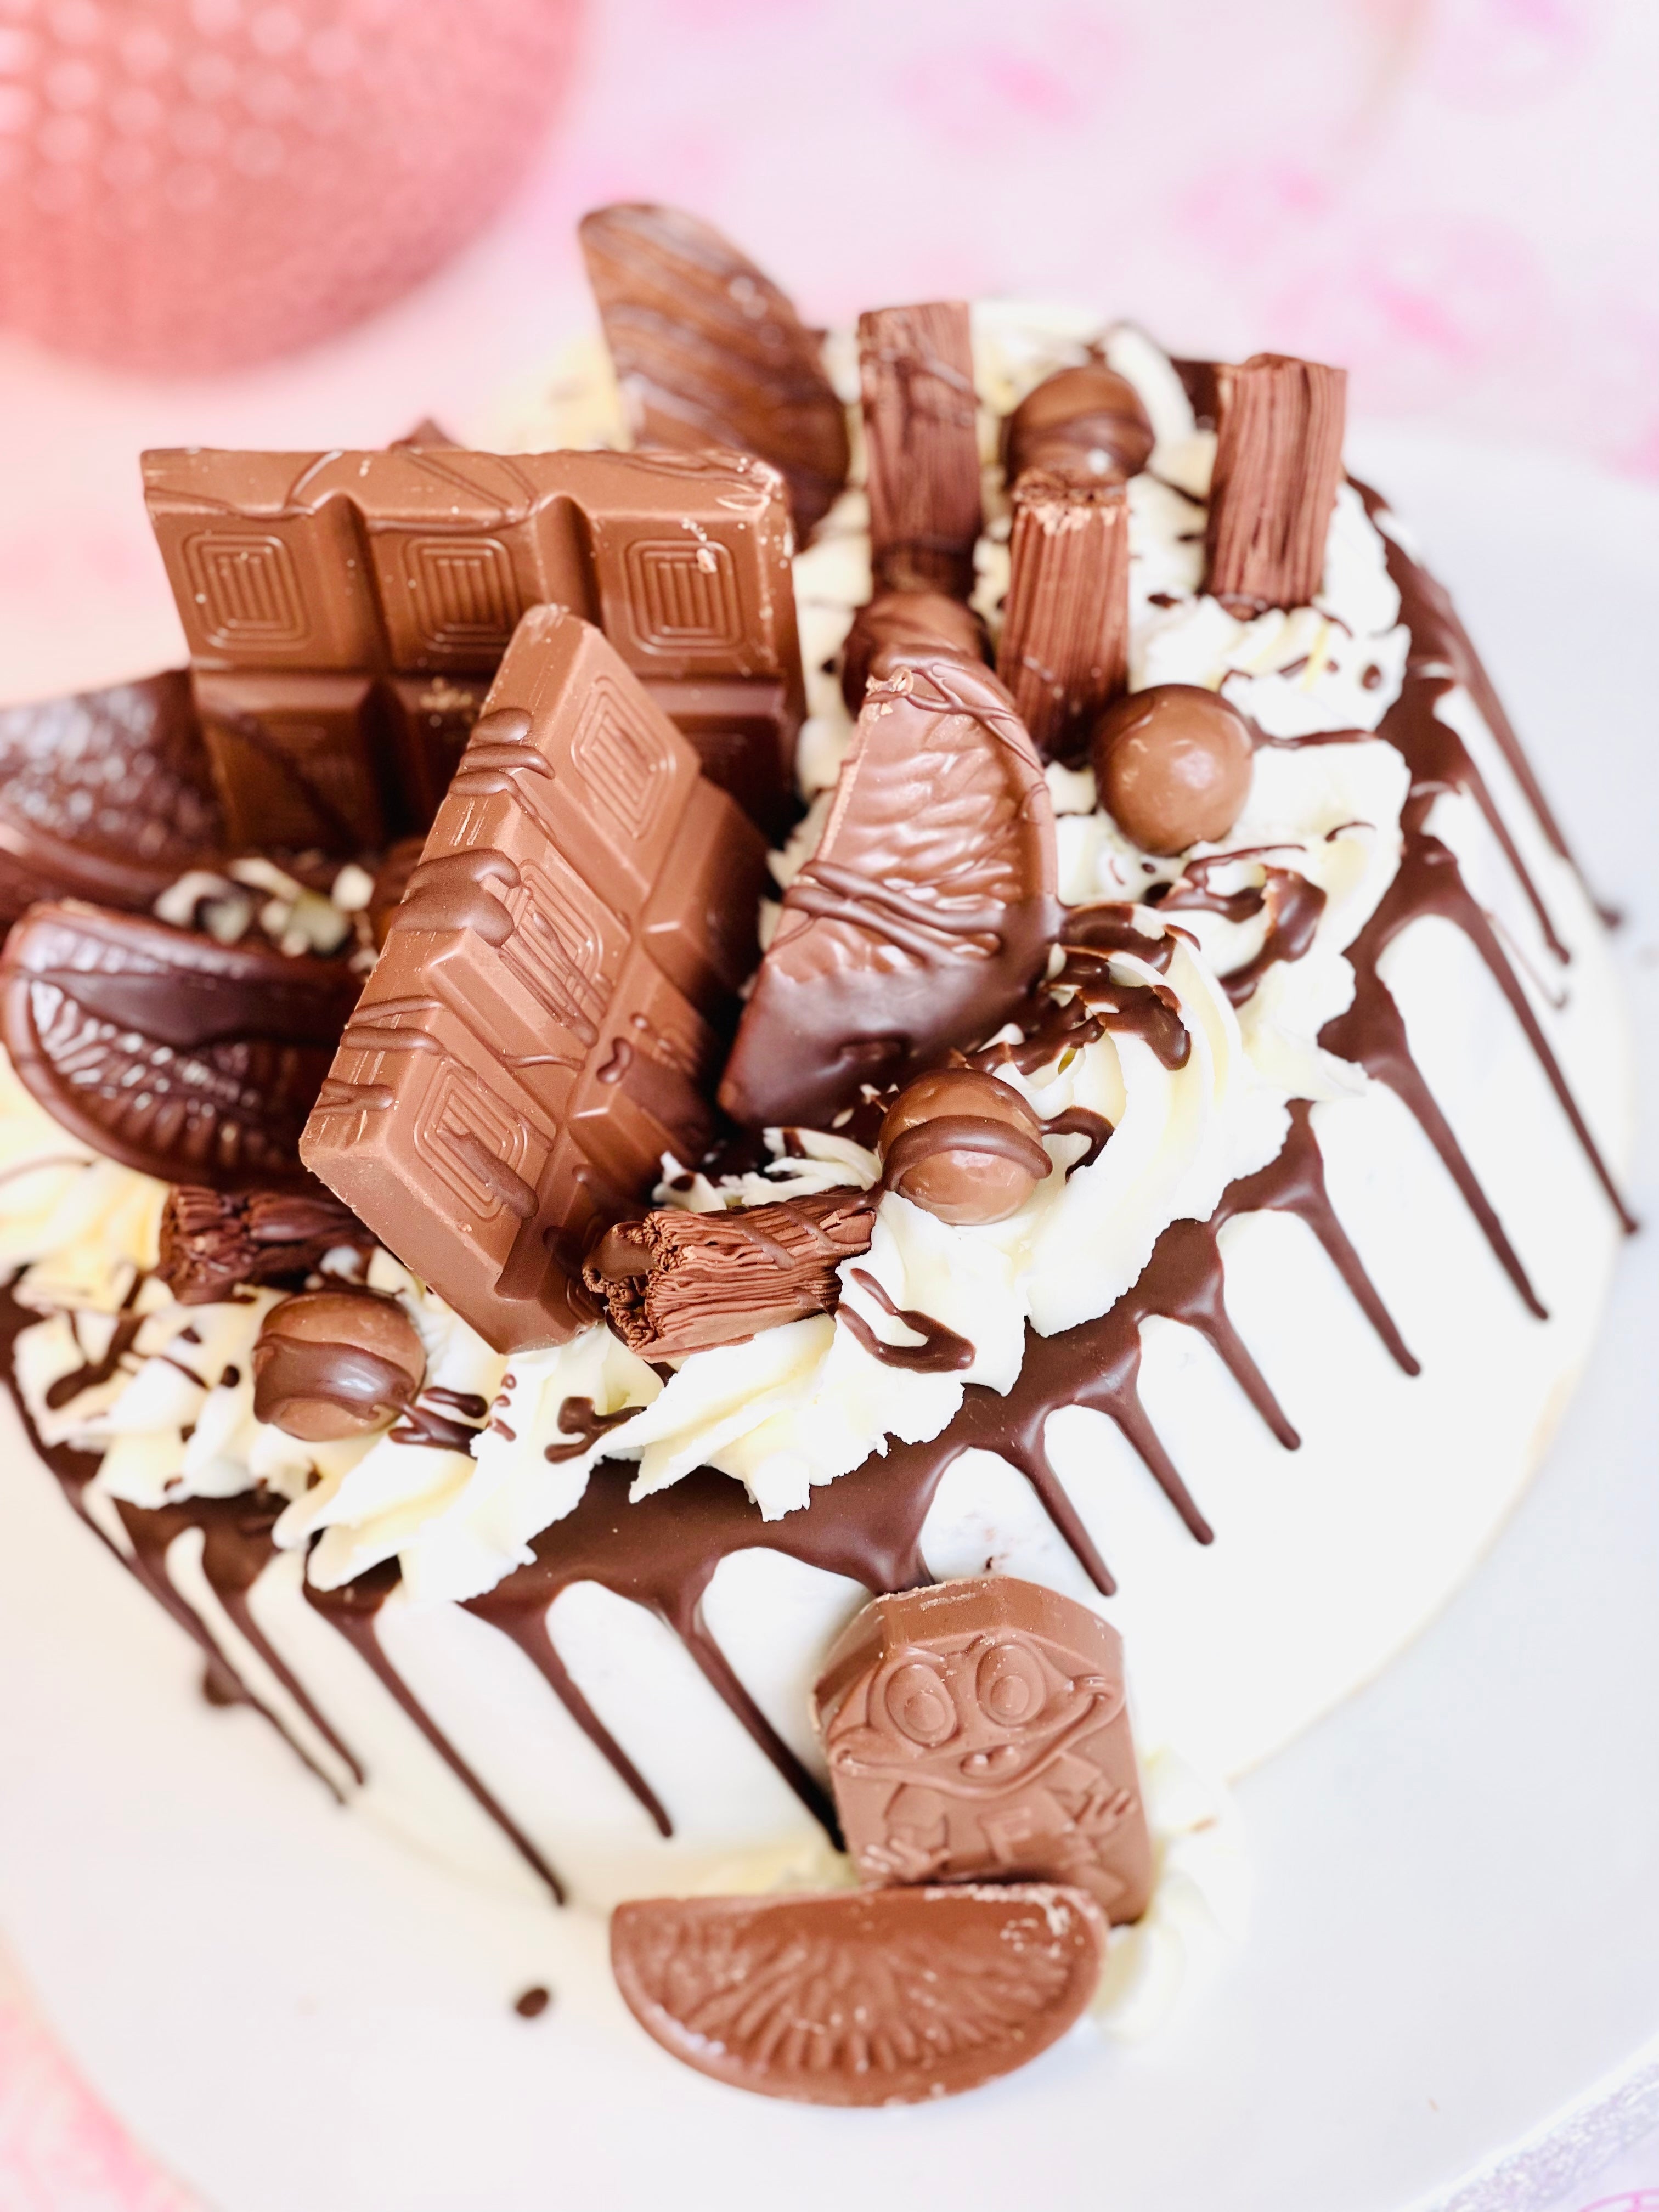 Details 63+ chocolate overload cake 7th heaven latest - in.daotaonec